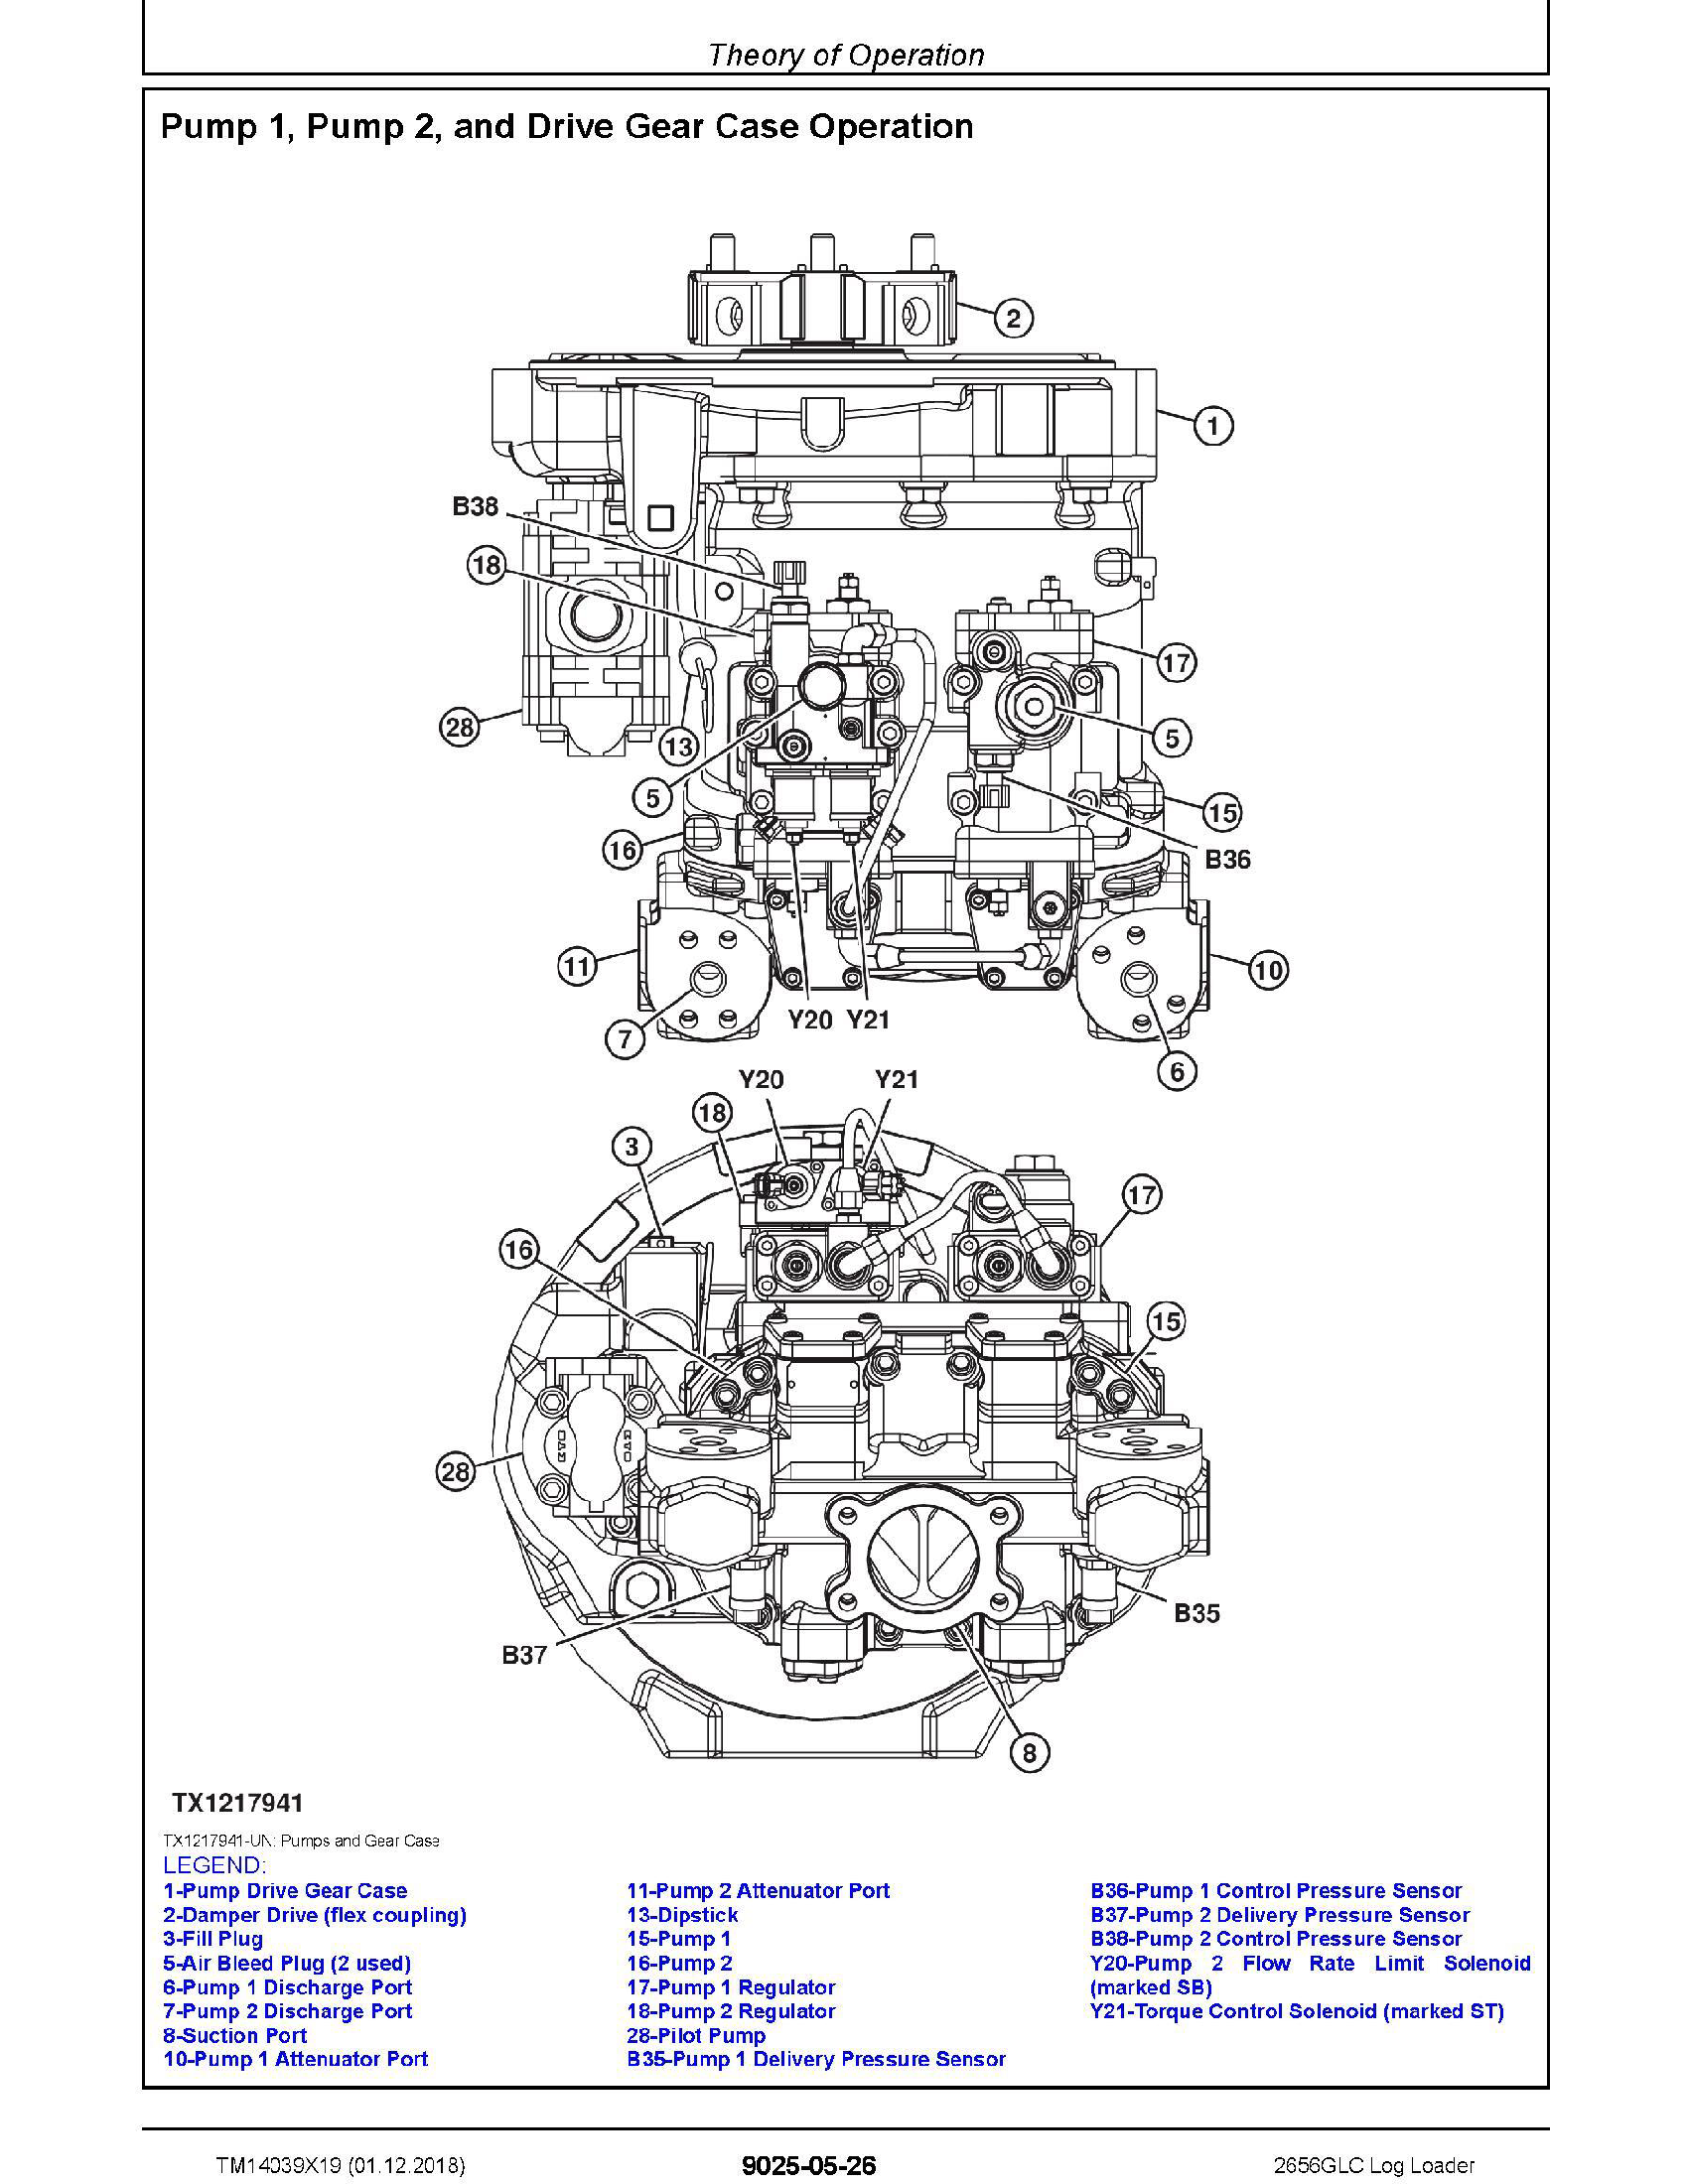 John Deere 5100MH manual